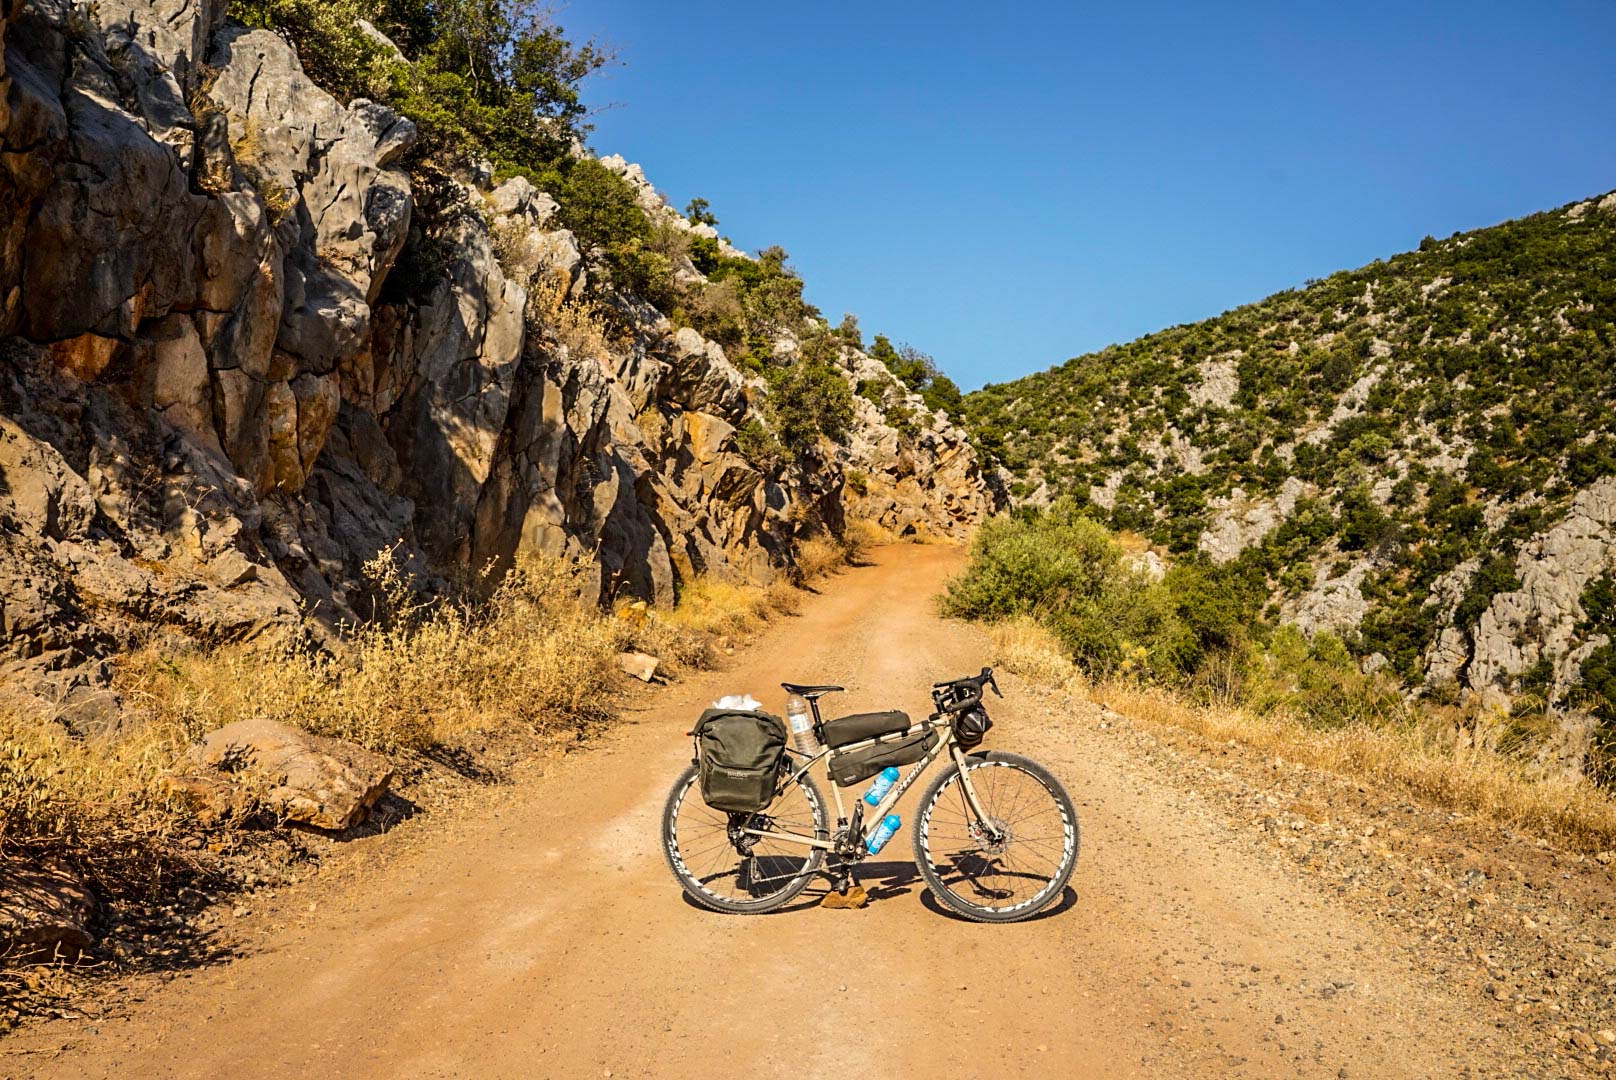 Lazzarin's bike in profile on a mountainous, rocky road.